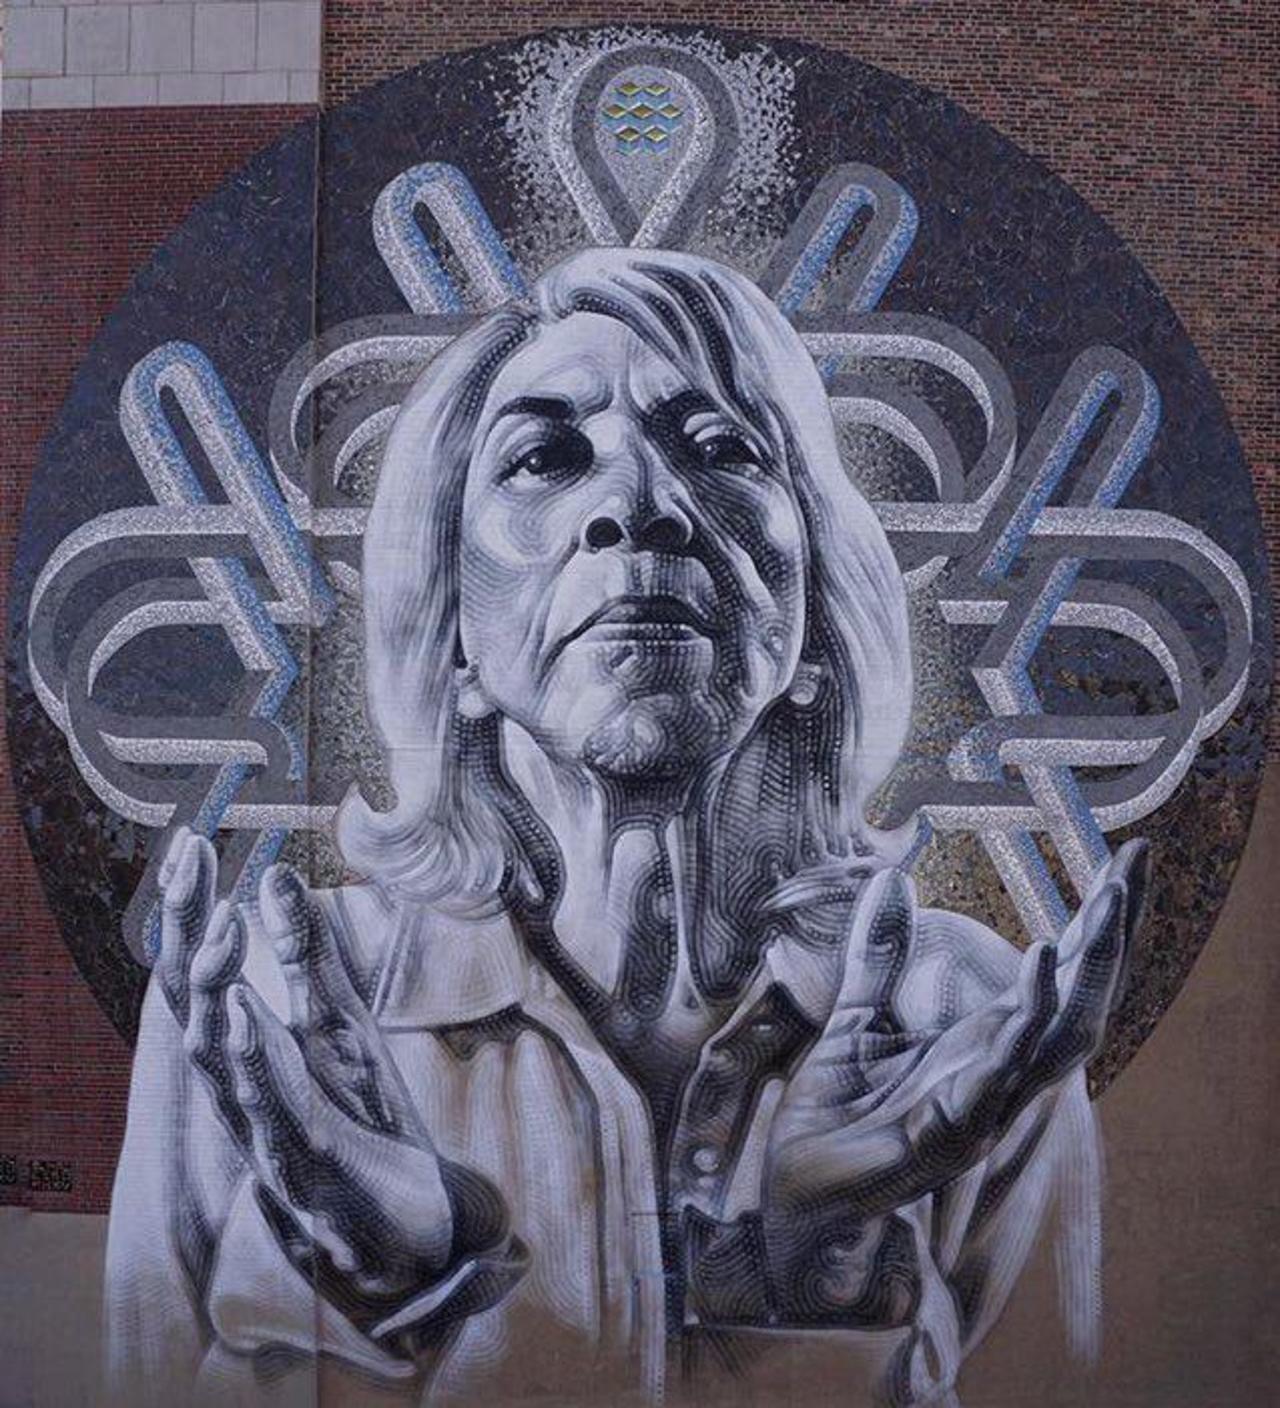 RT belilac "RT belilac "RT belilac "New Street Art by El Mac 

#art #graffiti #mural #streetart https://t.co/SUhEL1B5KR"""